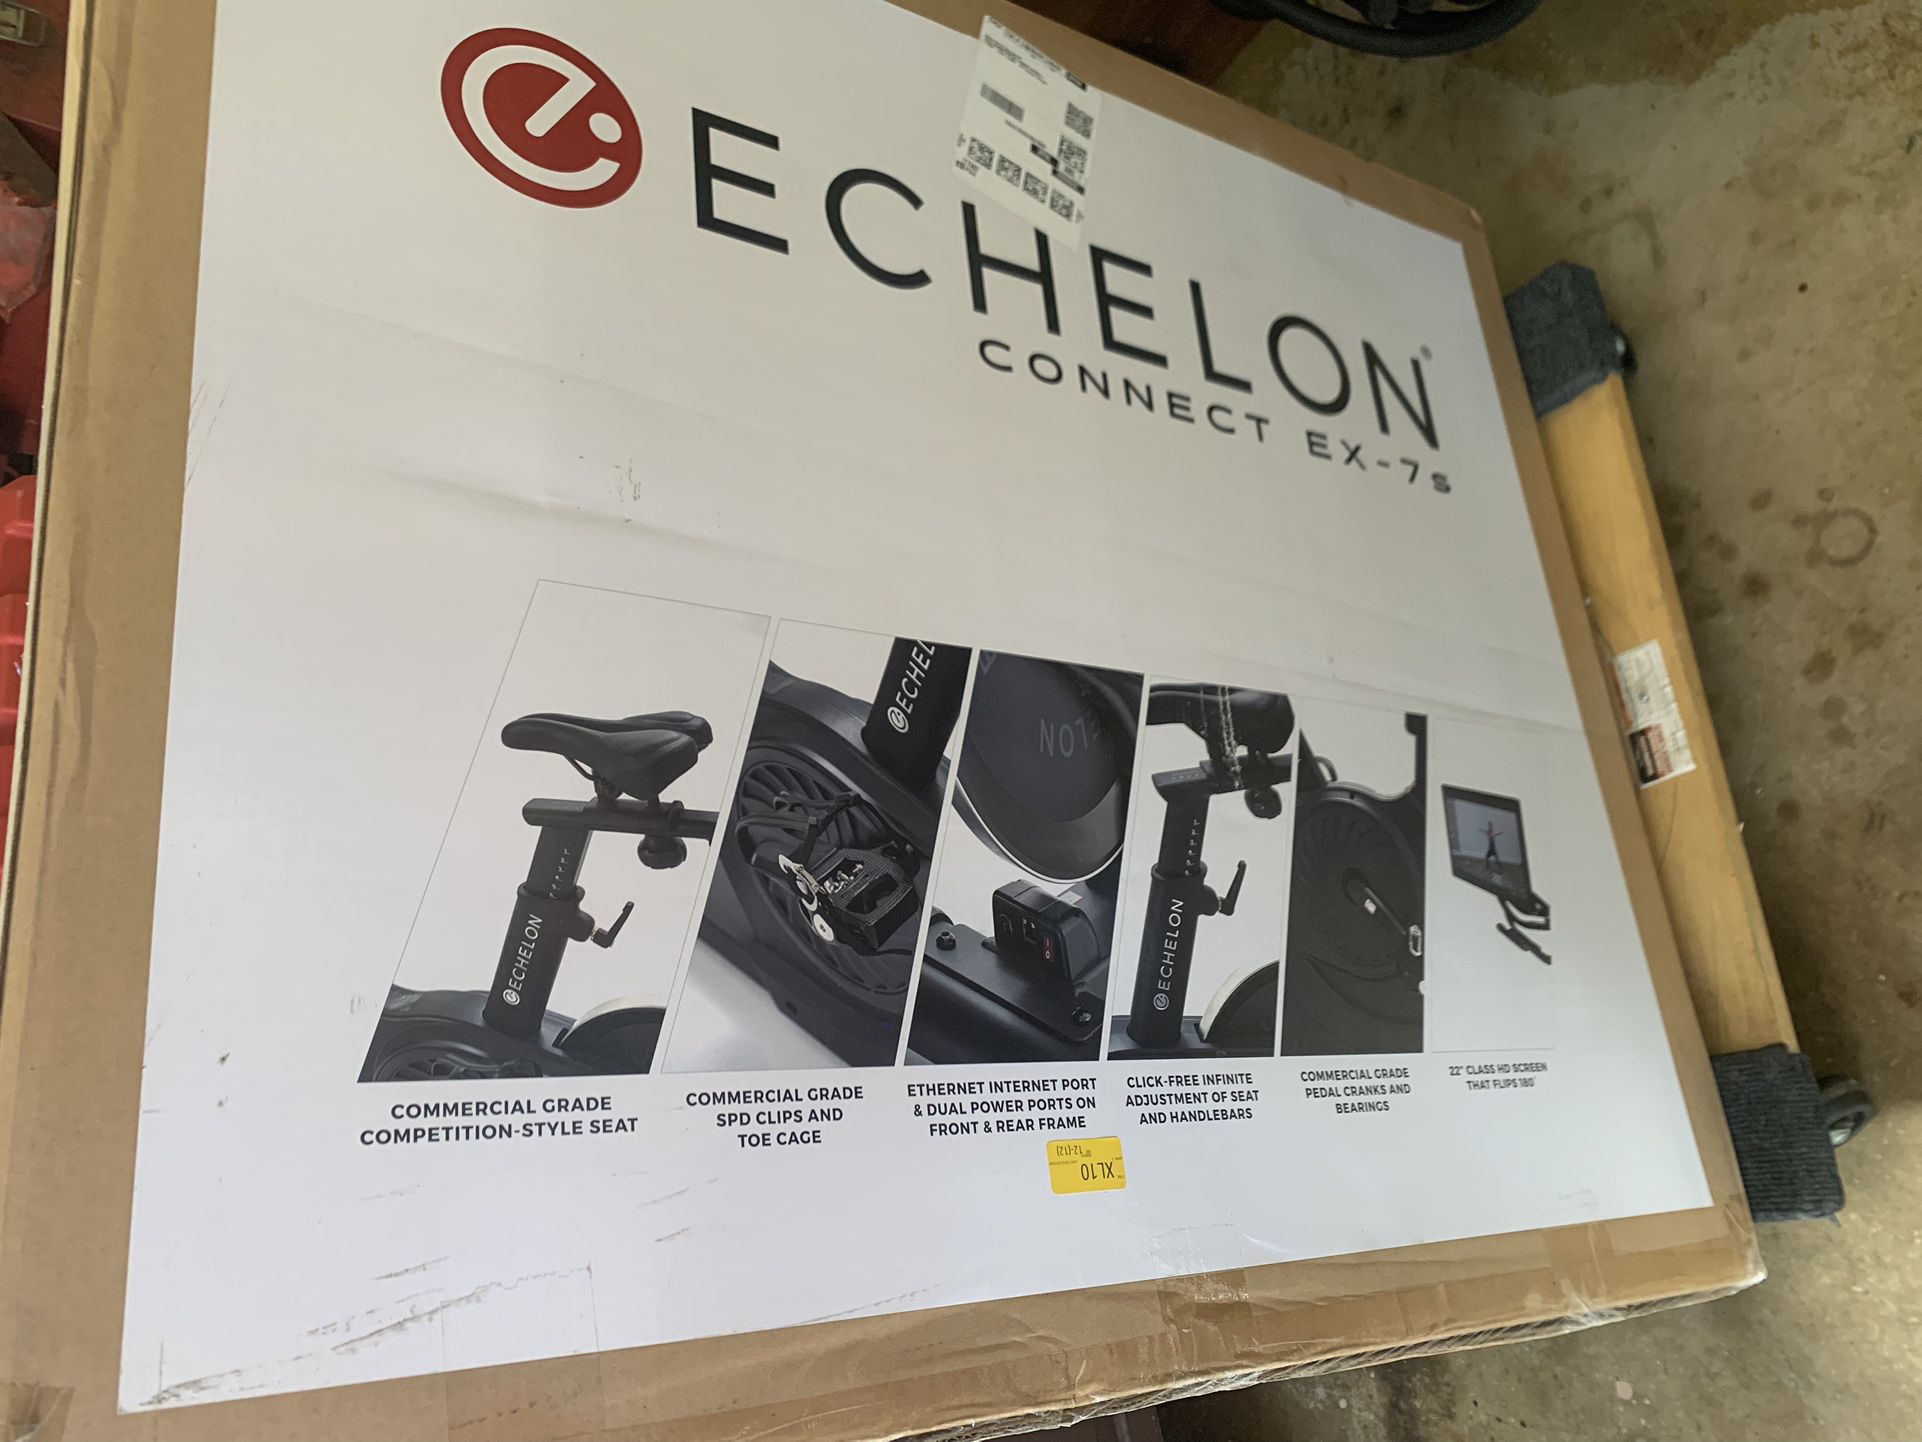 Echelon EX-7s Smart Connect Fitness Bike